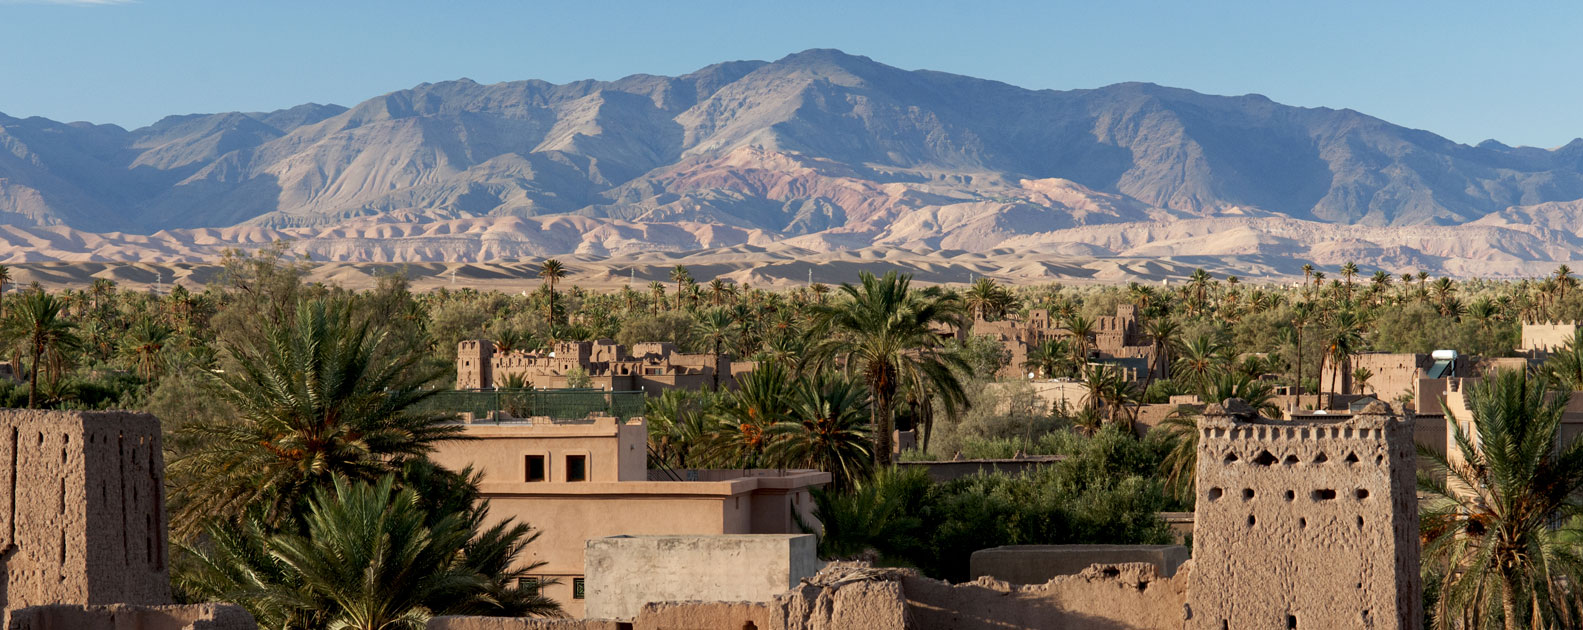 Ouarzazate-Zagora-Tinghir, een must-see filmreeks